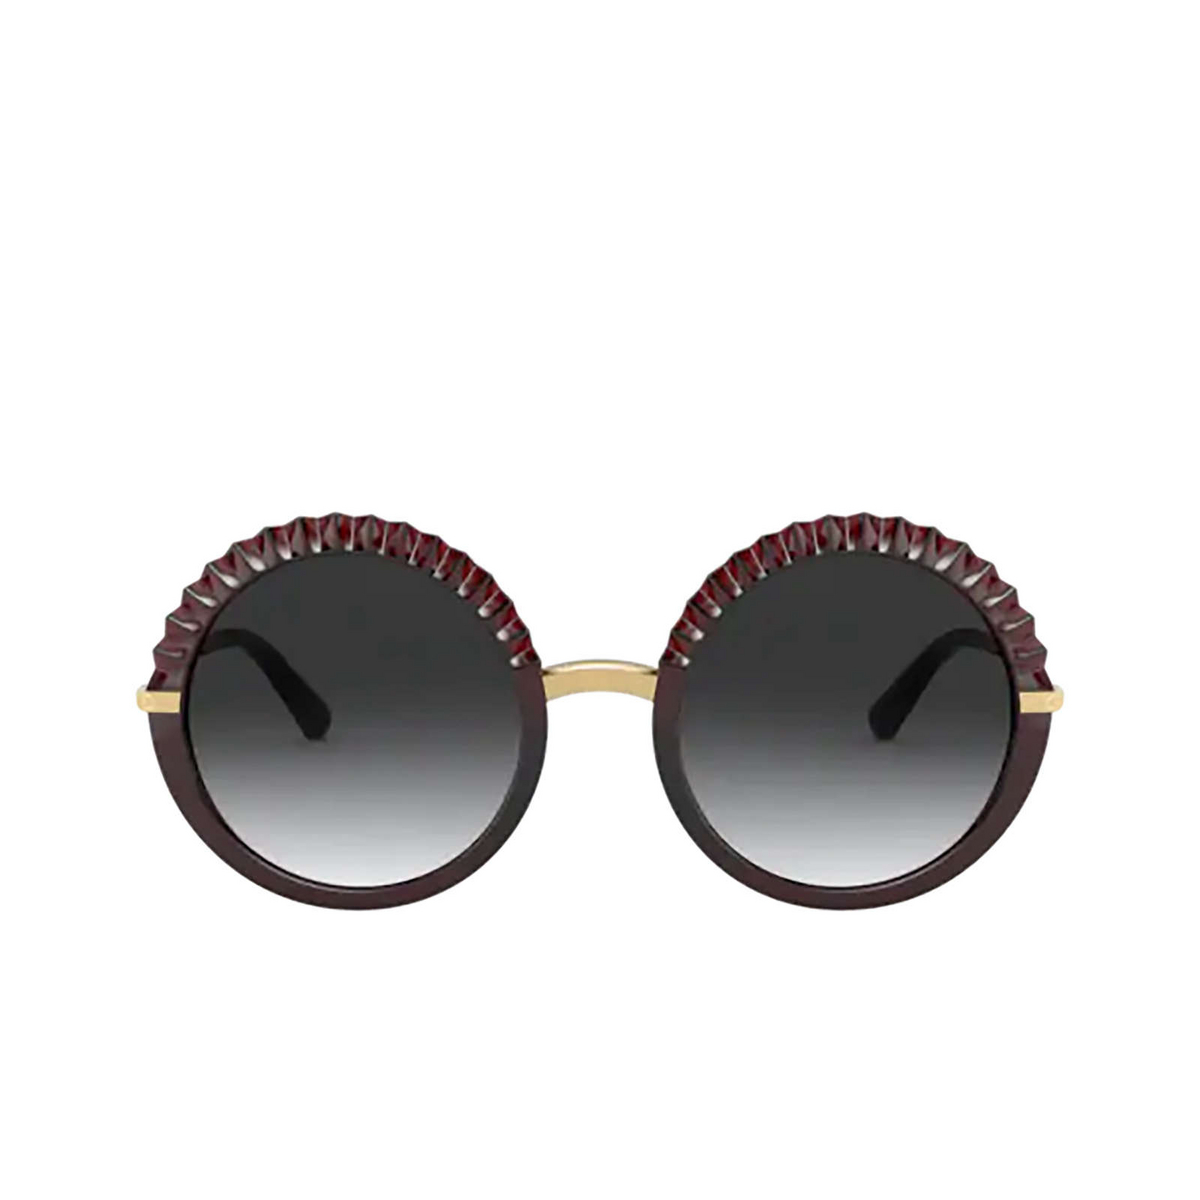 Dolce & Gabbana DG6130 Sunglasses 550/8G Transparent Red - front view